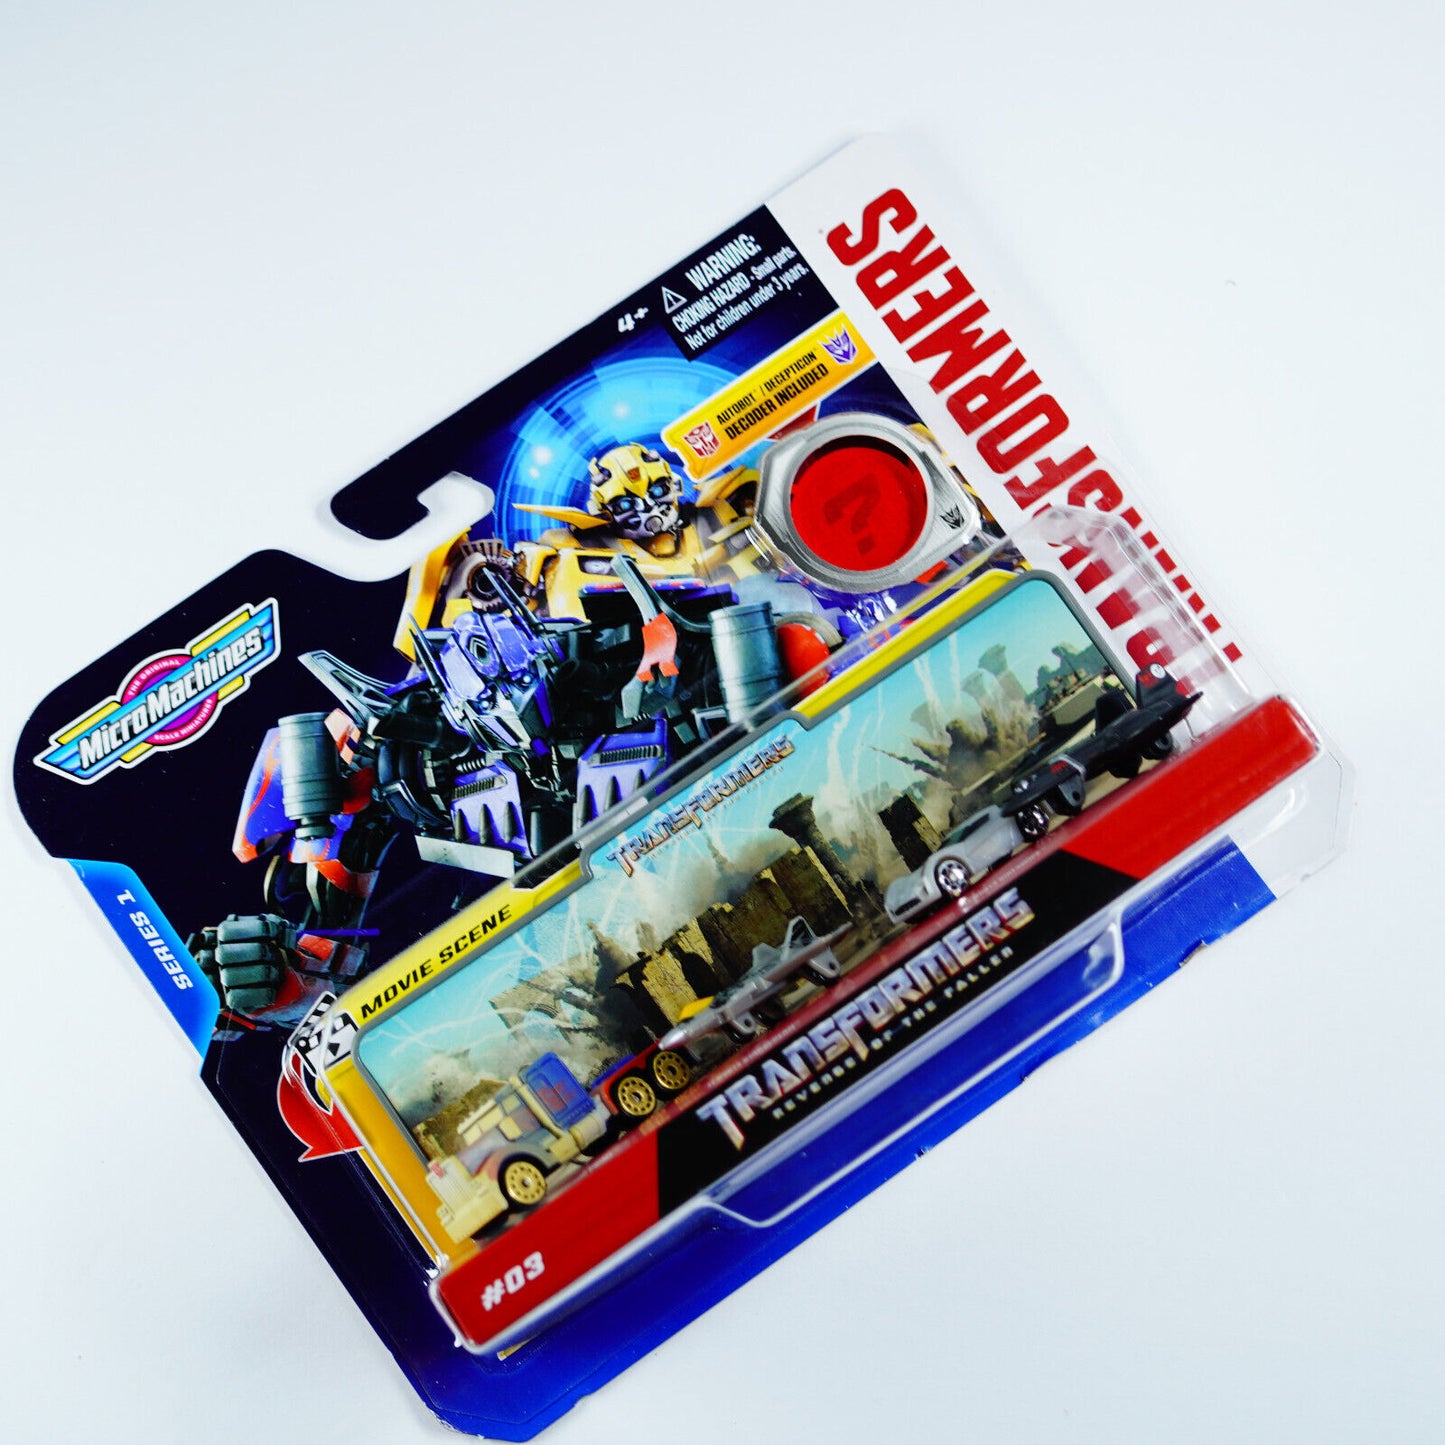 Micro Machines Transformers Series 1 #03 Optimus Starscream Sideswipe Jetfire